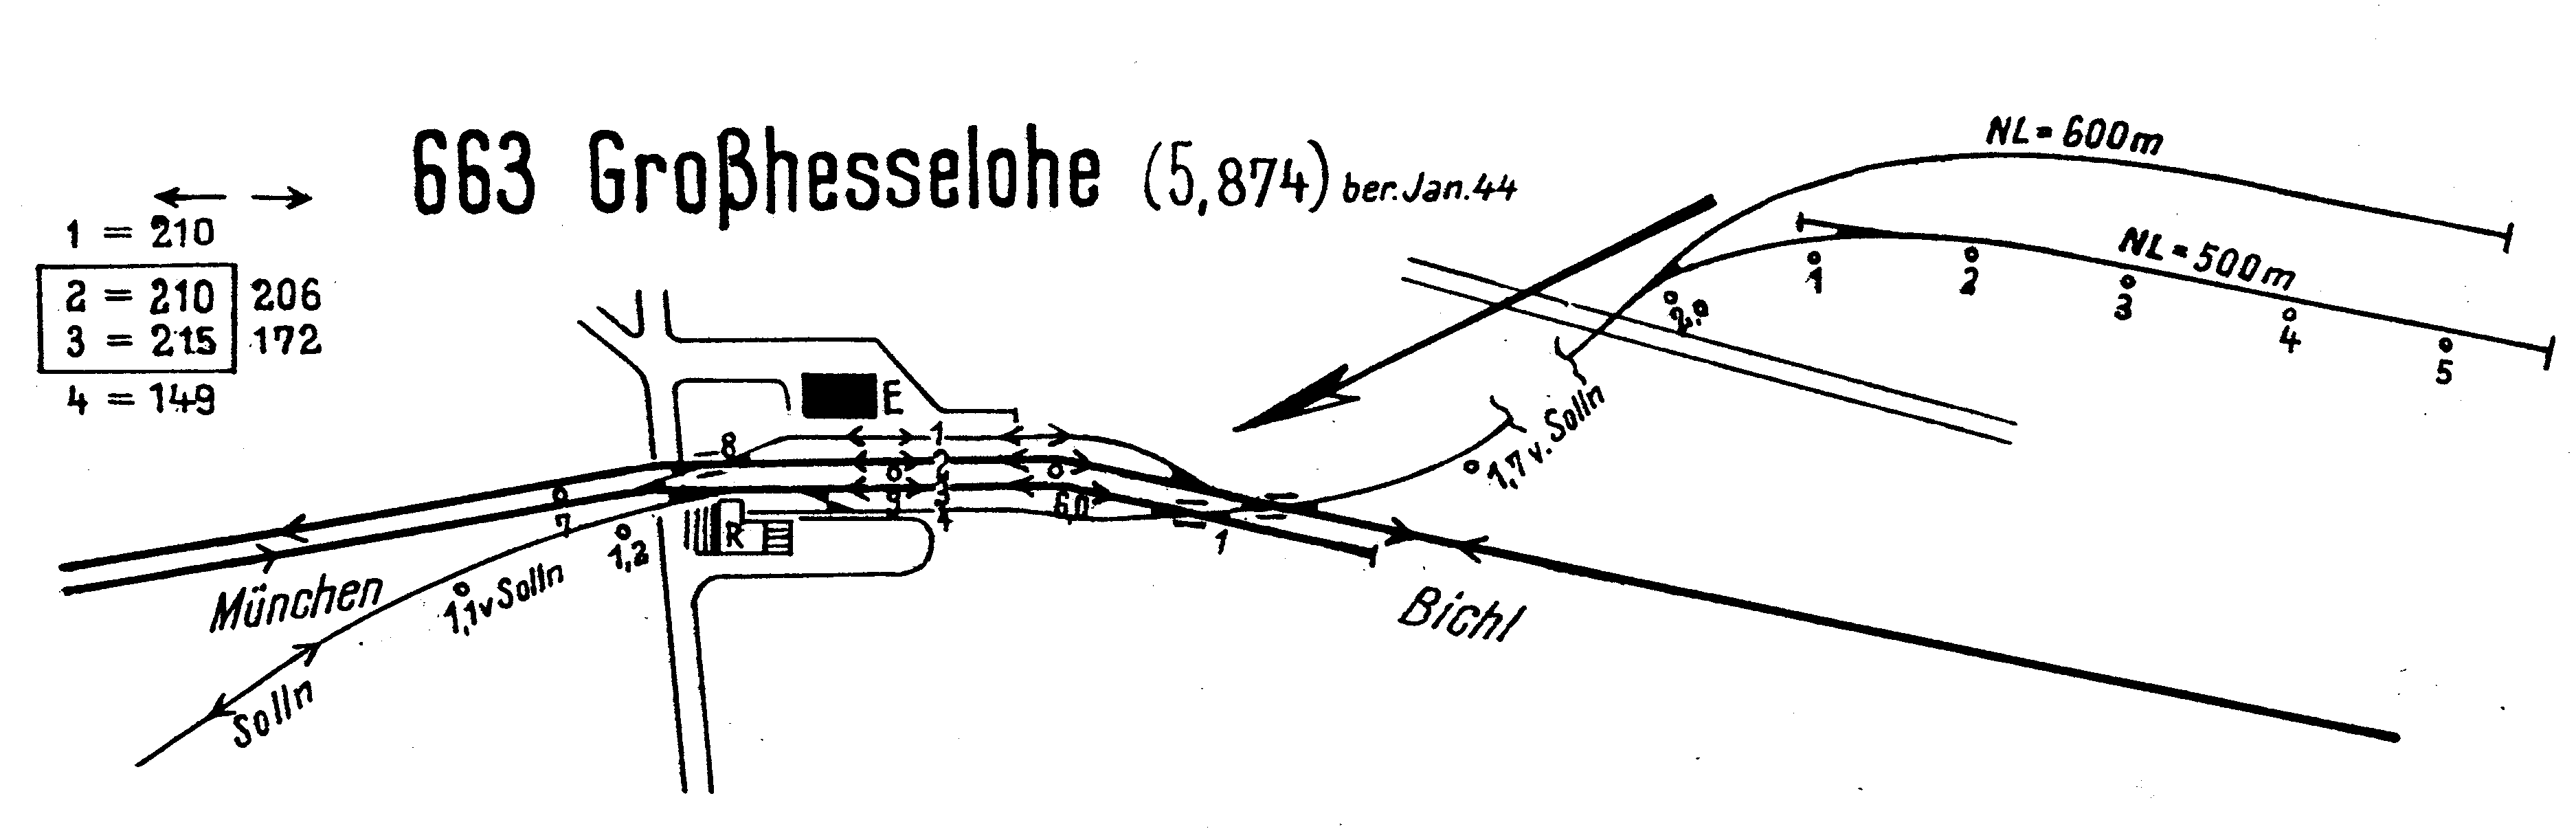 5507_grosshesselohe-isbf_1944